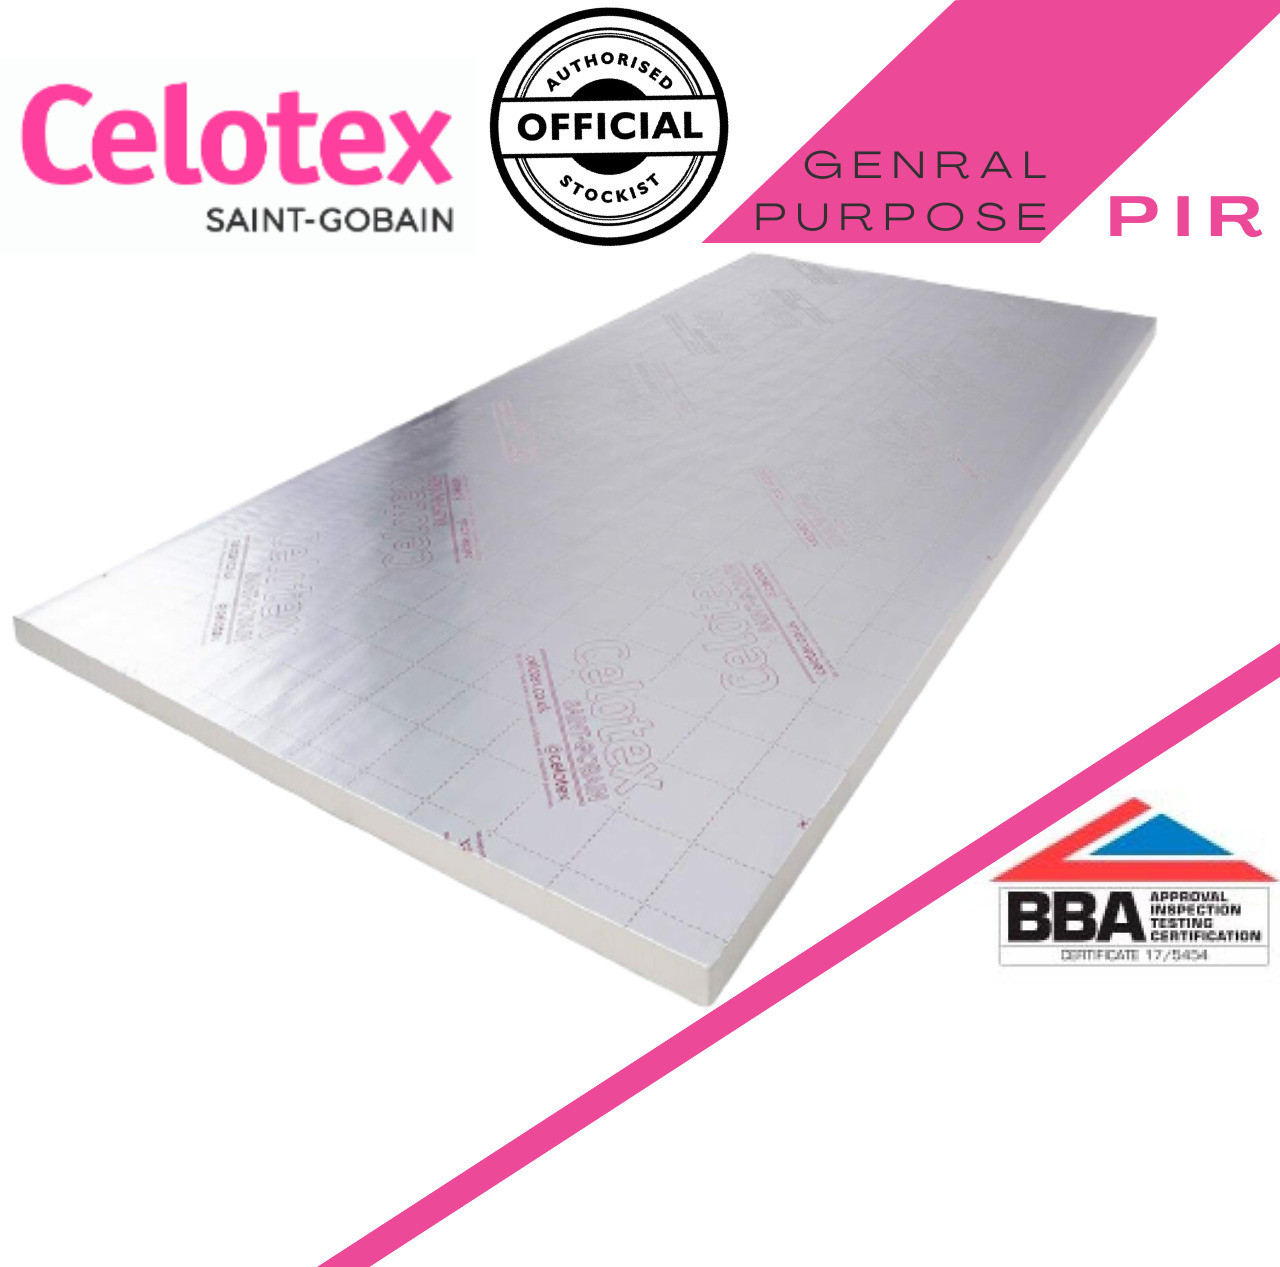 60mm- Celotex GA4060 General Purpose PIR Insulation Board - 2400 X 1200 X 60mm  778042 CLO-50777